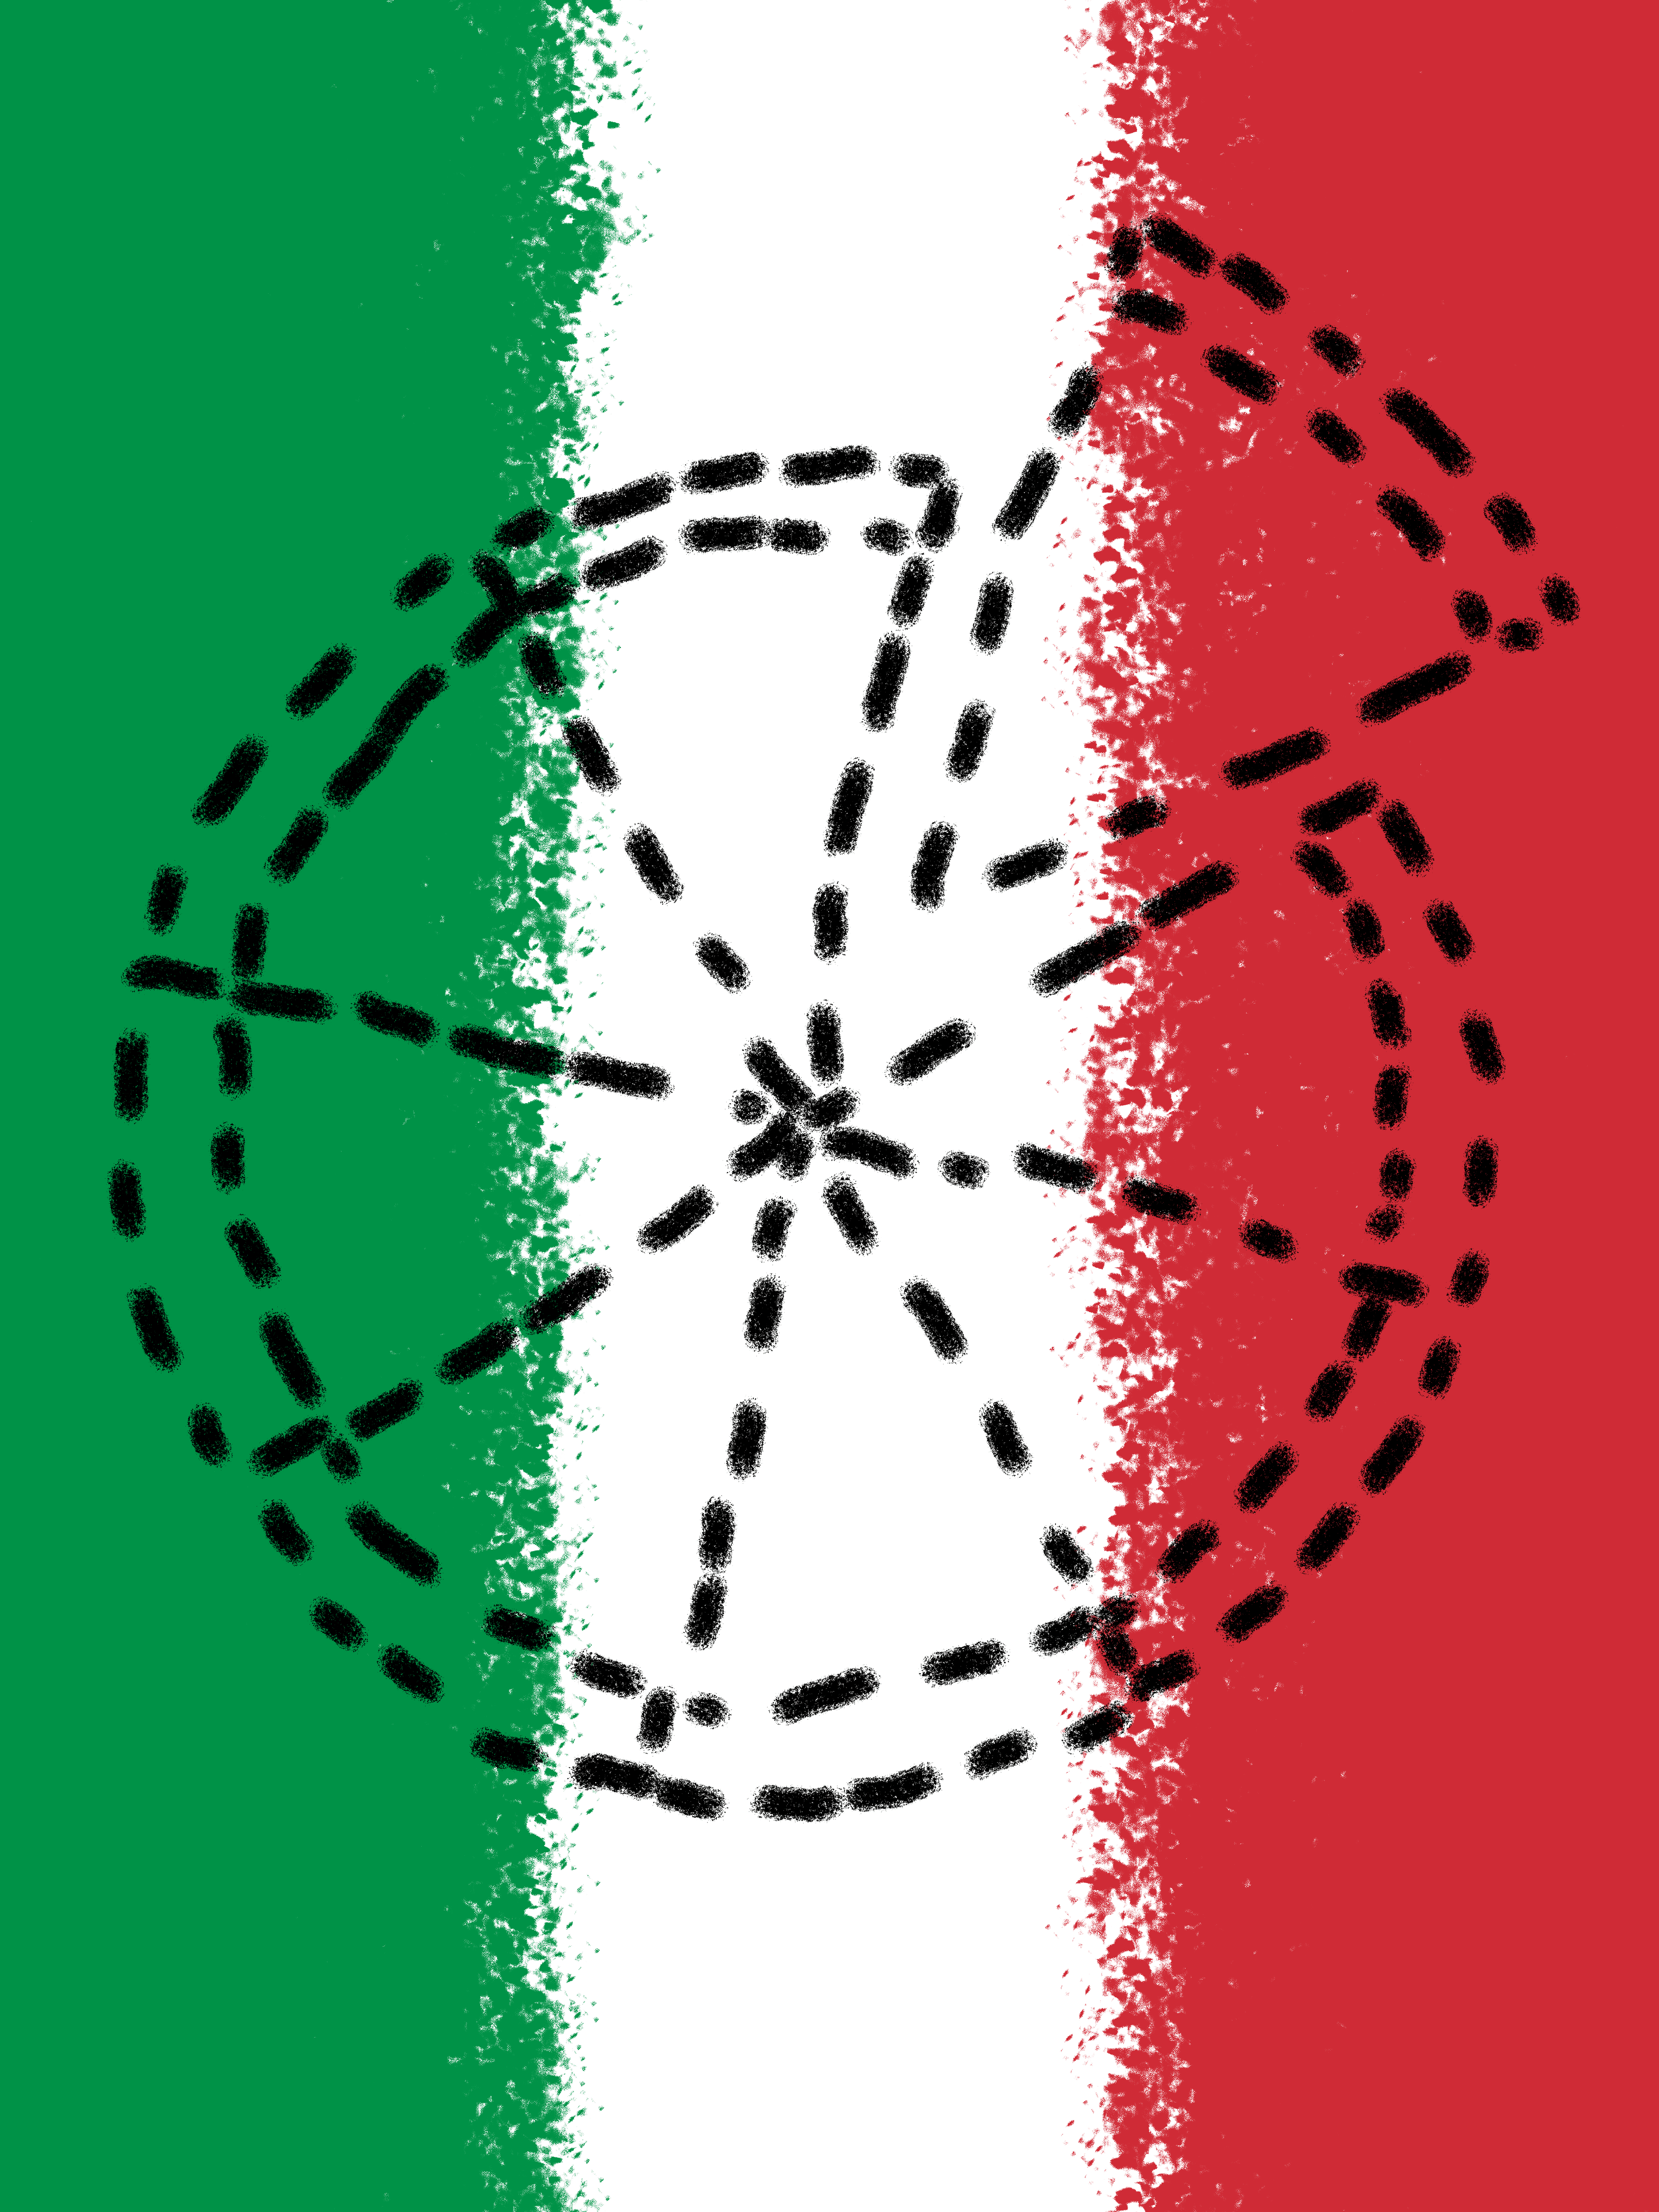 15 # Country Symbol : Italy - Pizza